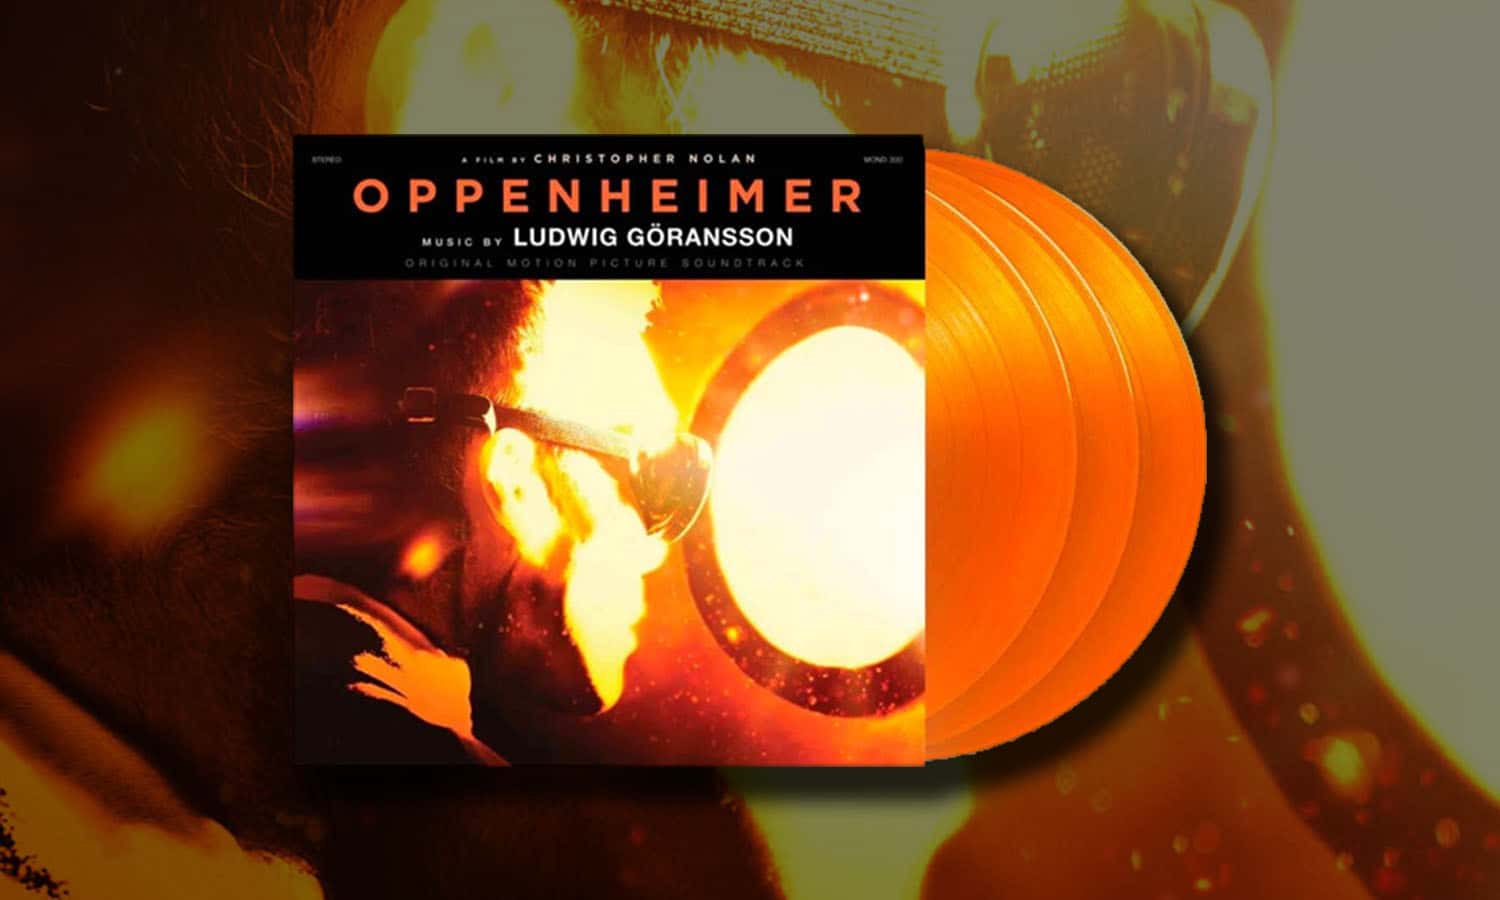 Vinyle Oppenheimer : prix et alertes